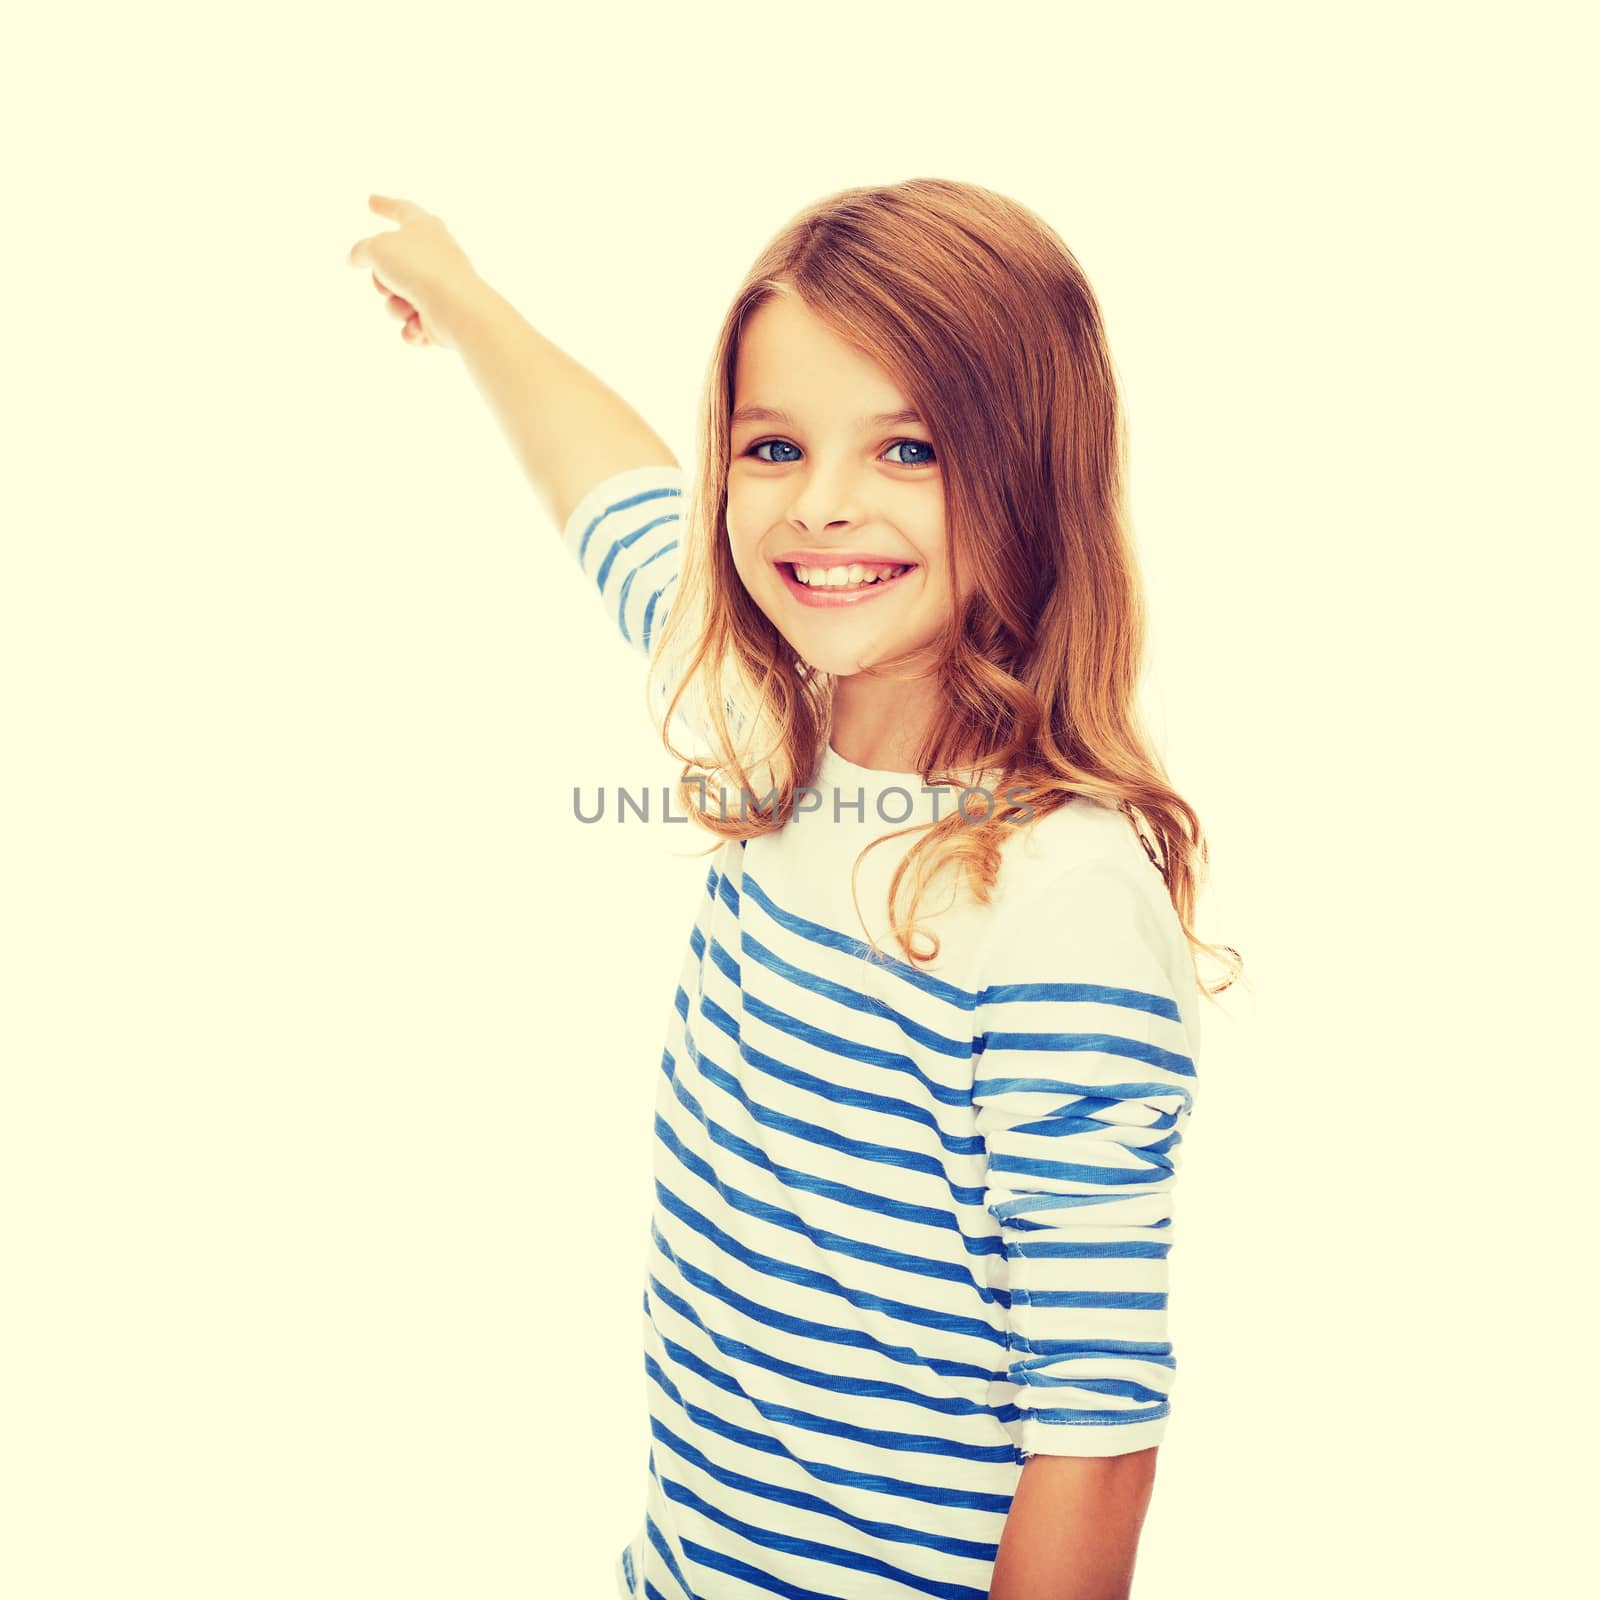 smiling girl pointing at virtual screen by dolgachov